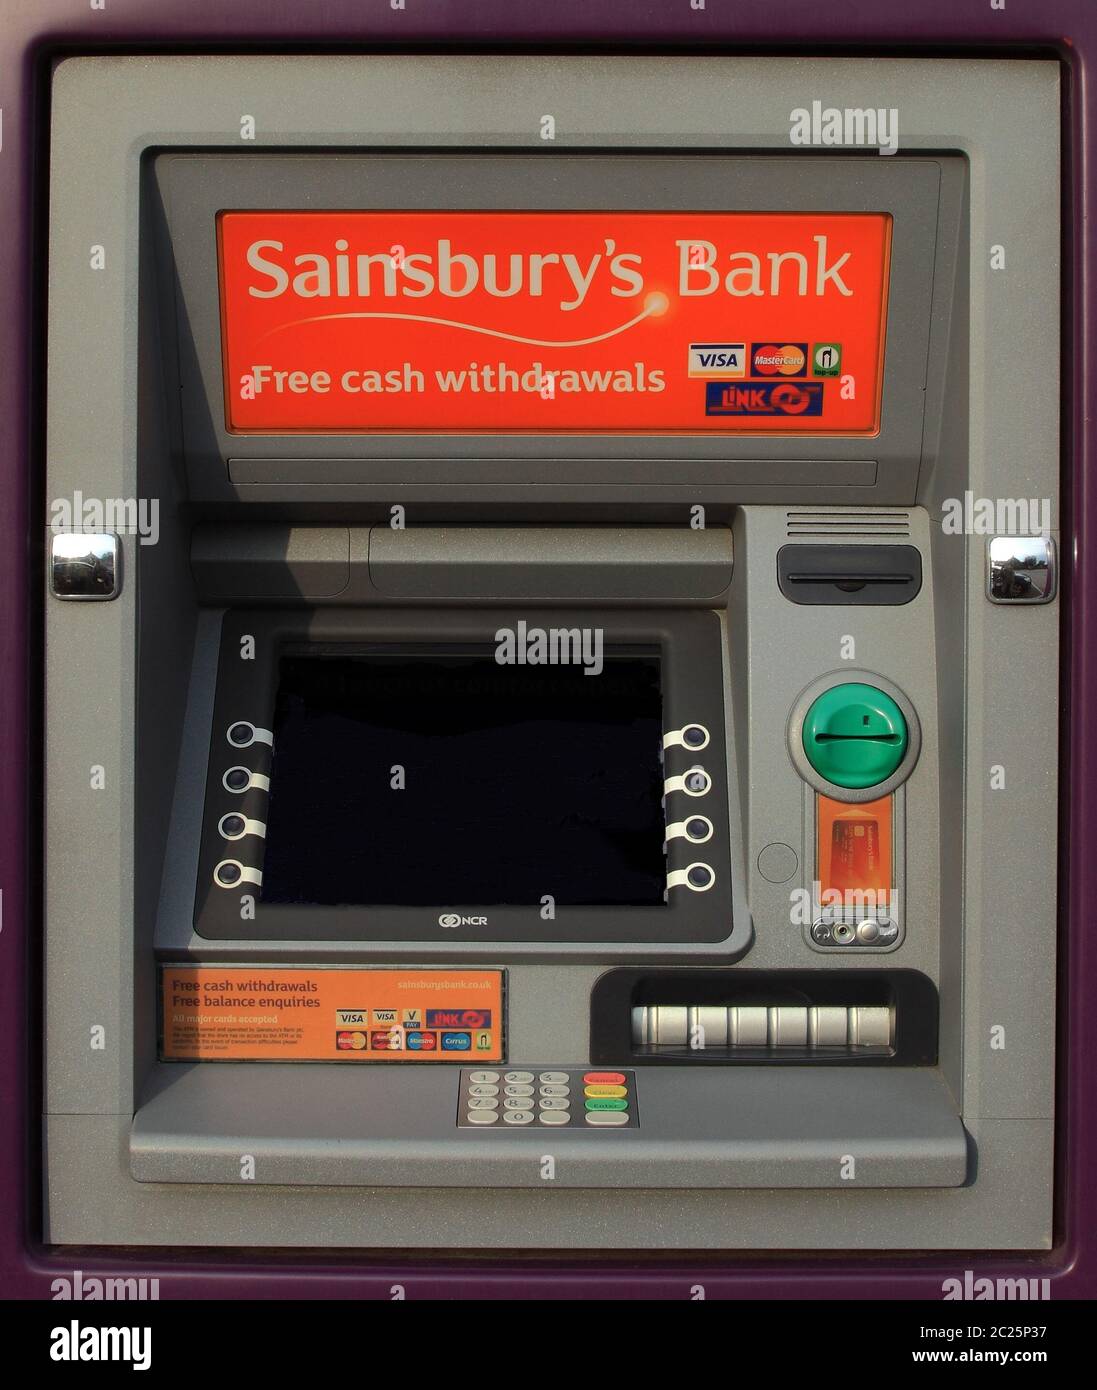 Sainsbury's Bank, Cashpoint machine, ATM, England, UK, English, Cash Point, instant cash Stock Photo